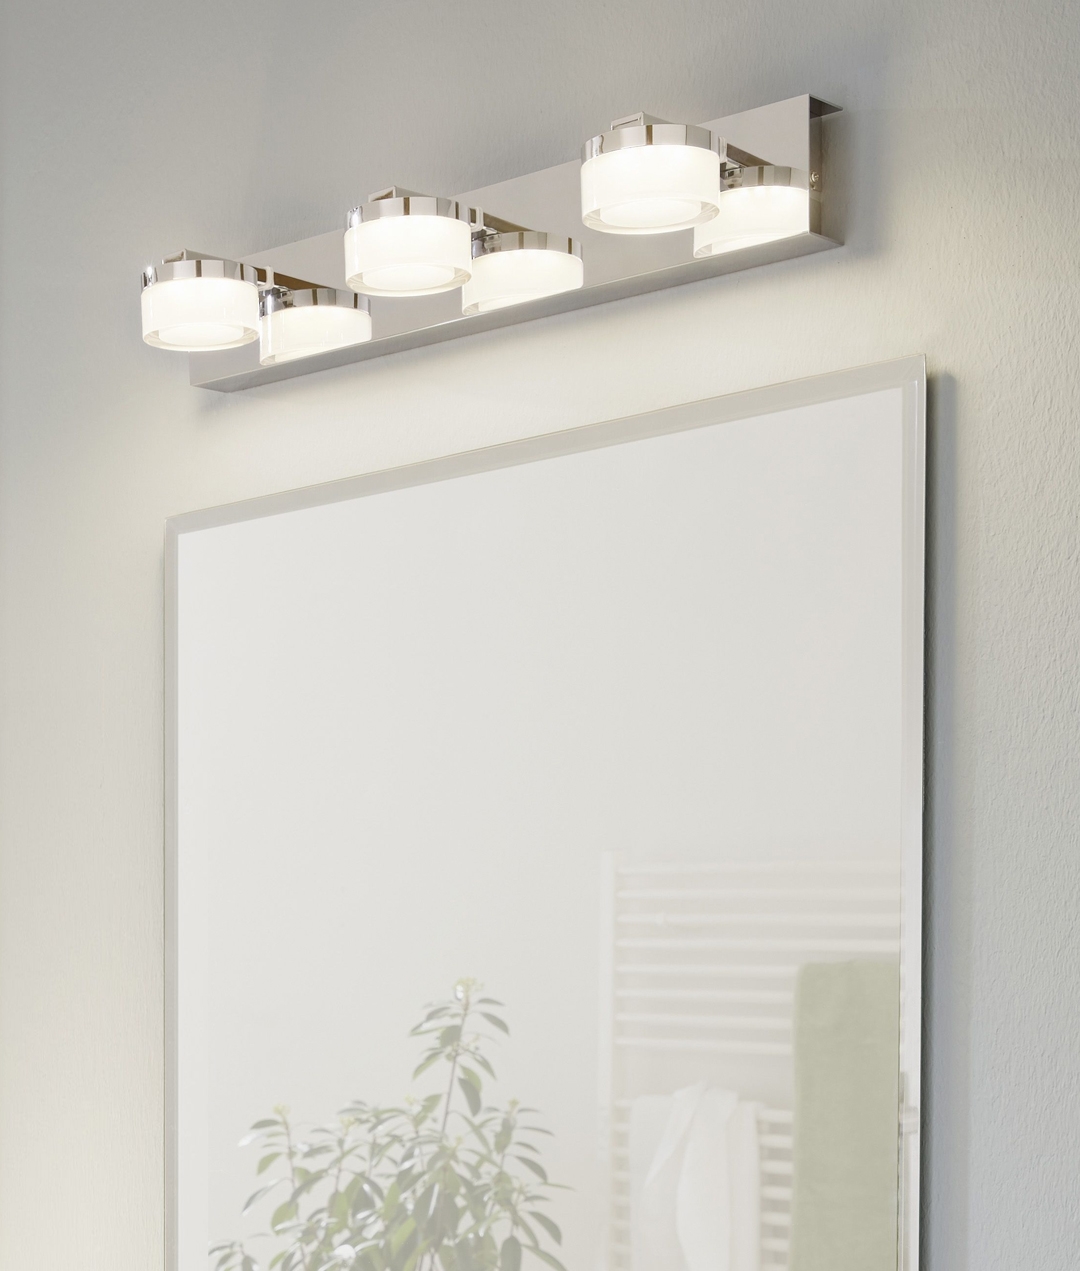 LED bathroom over mirror light choose 2 or 3 light options